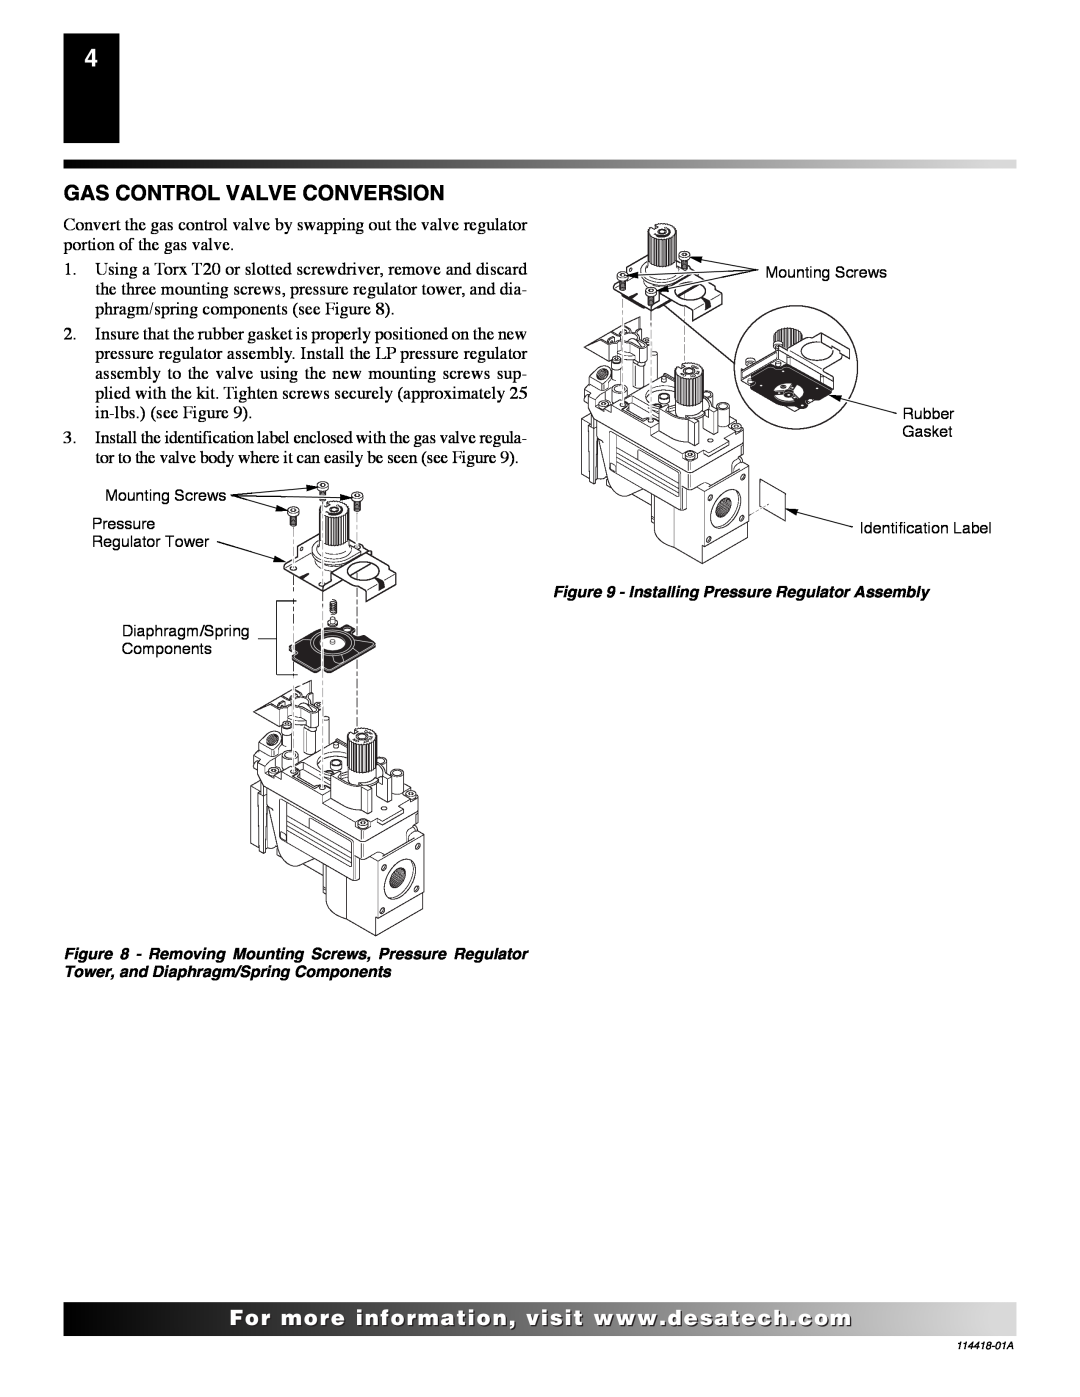 Desa PCDM-36VB installation instructions Gas Control Valve Conversion, Installing Pressure Regulator Assembly 